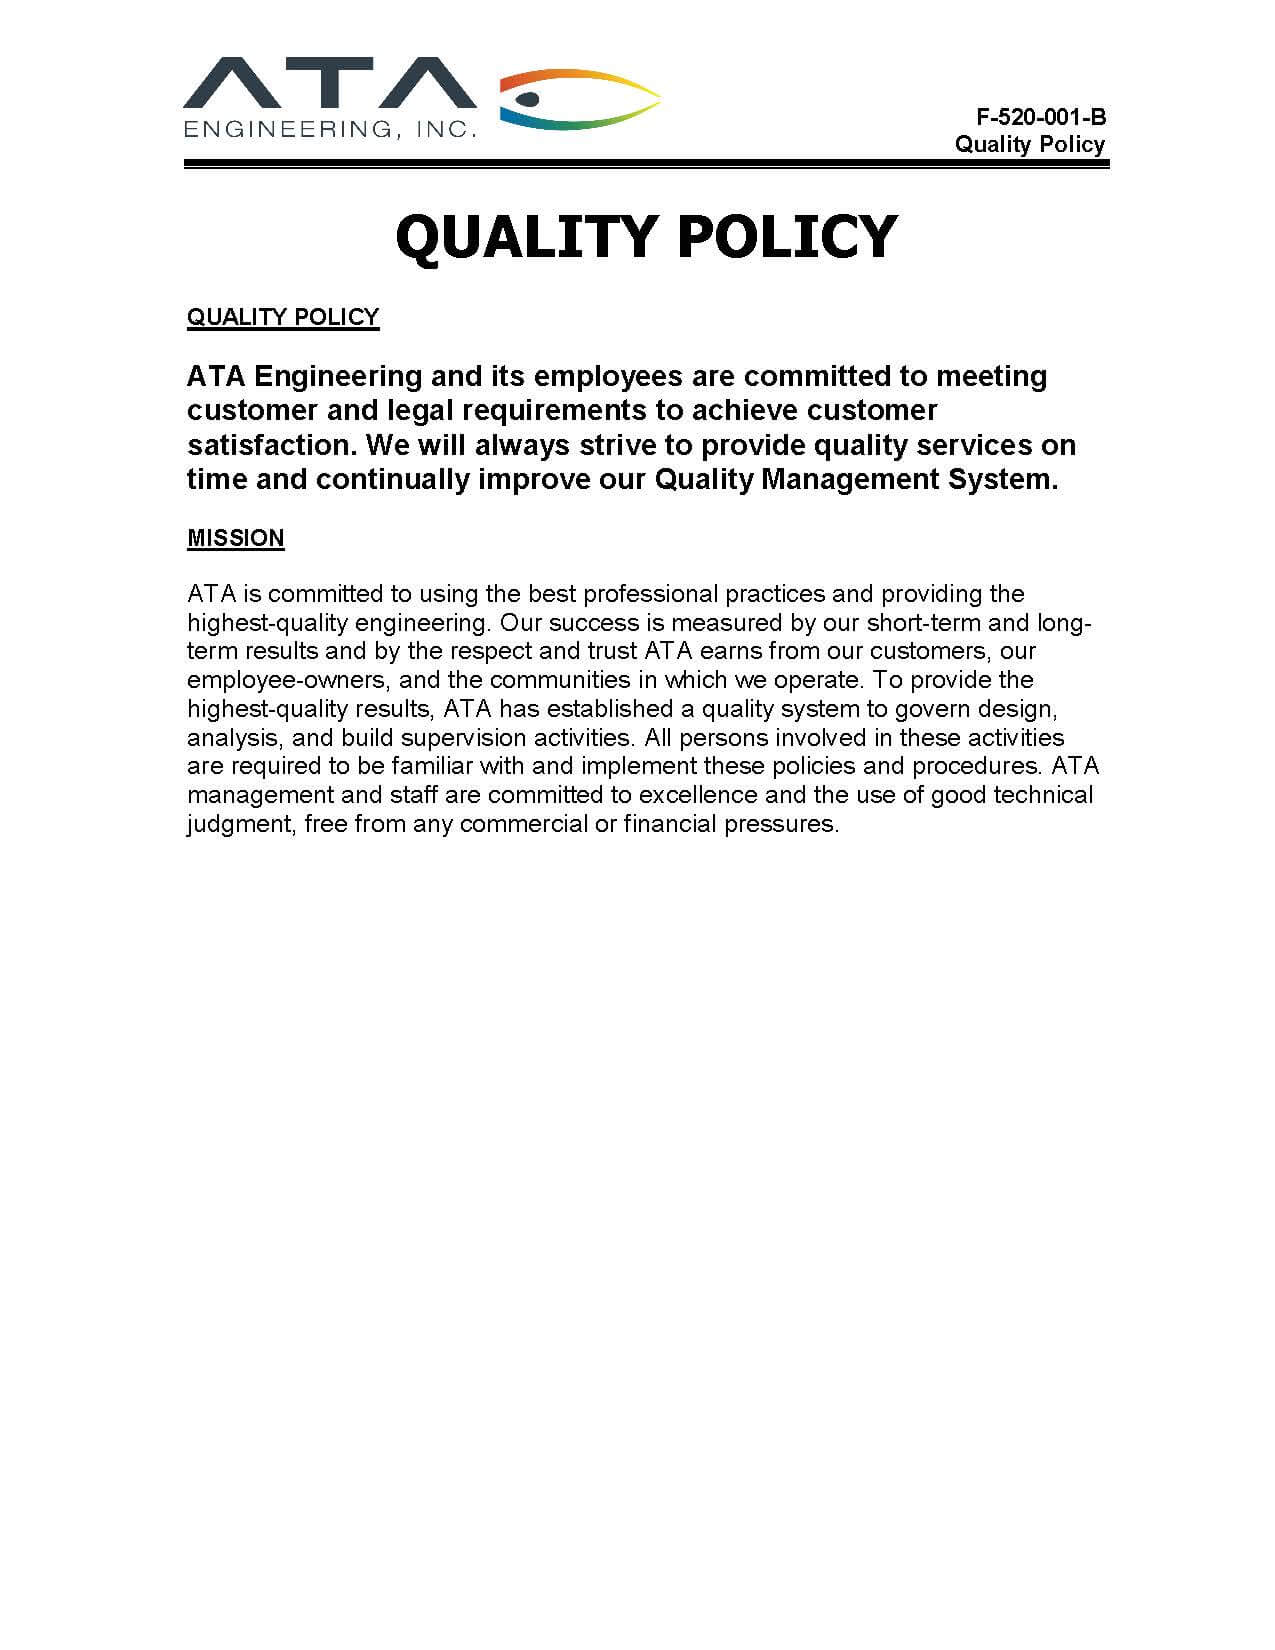 ATA Quality Policy